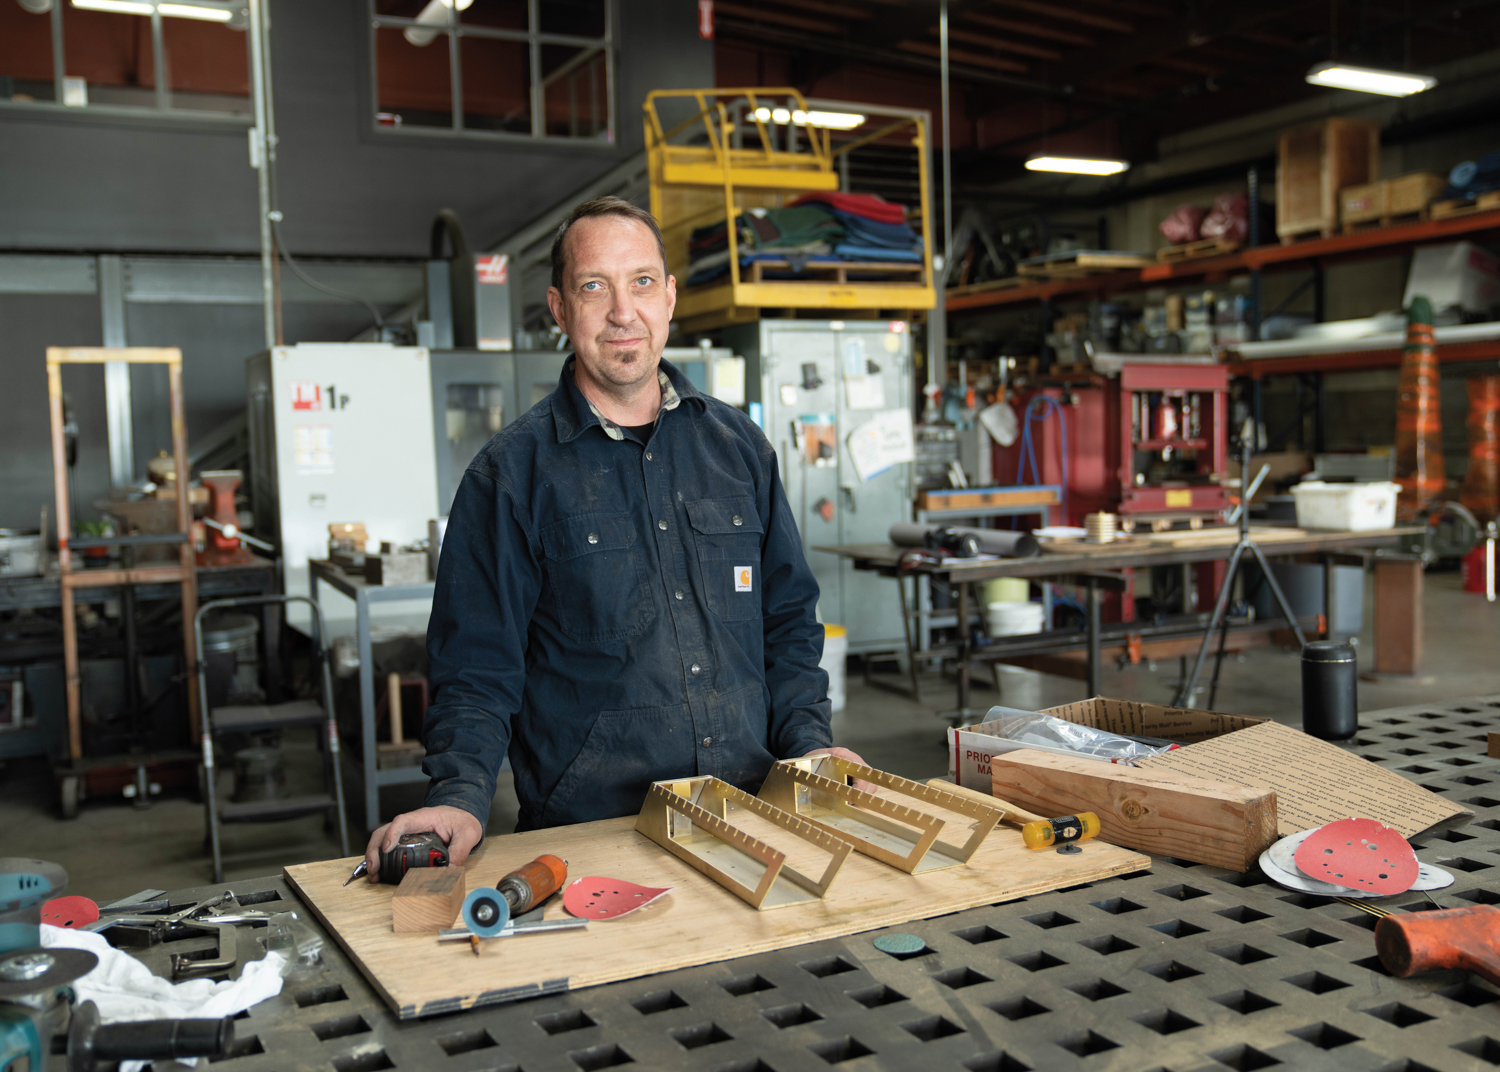 Meet A San Francisco Jewelry Designer Turned Furniture Maker